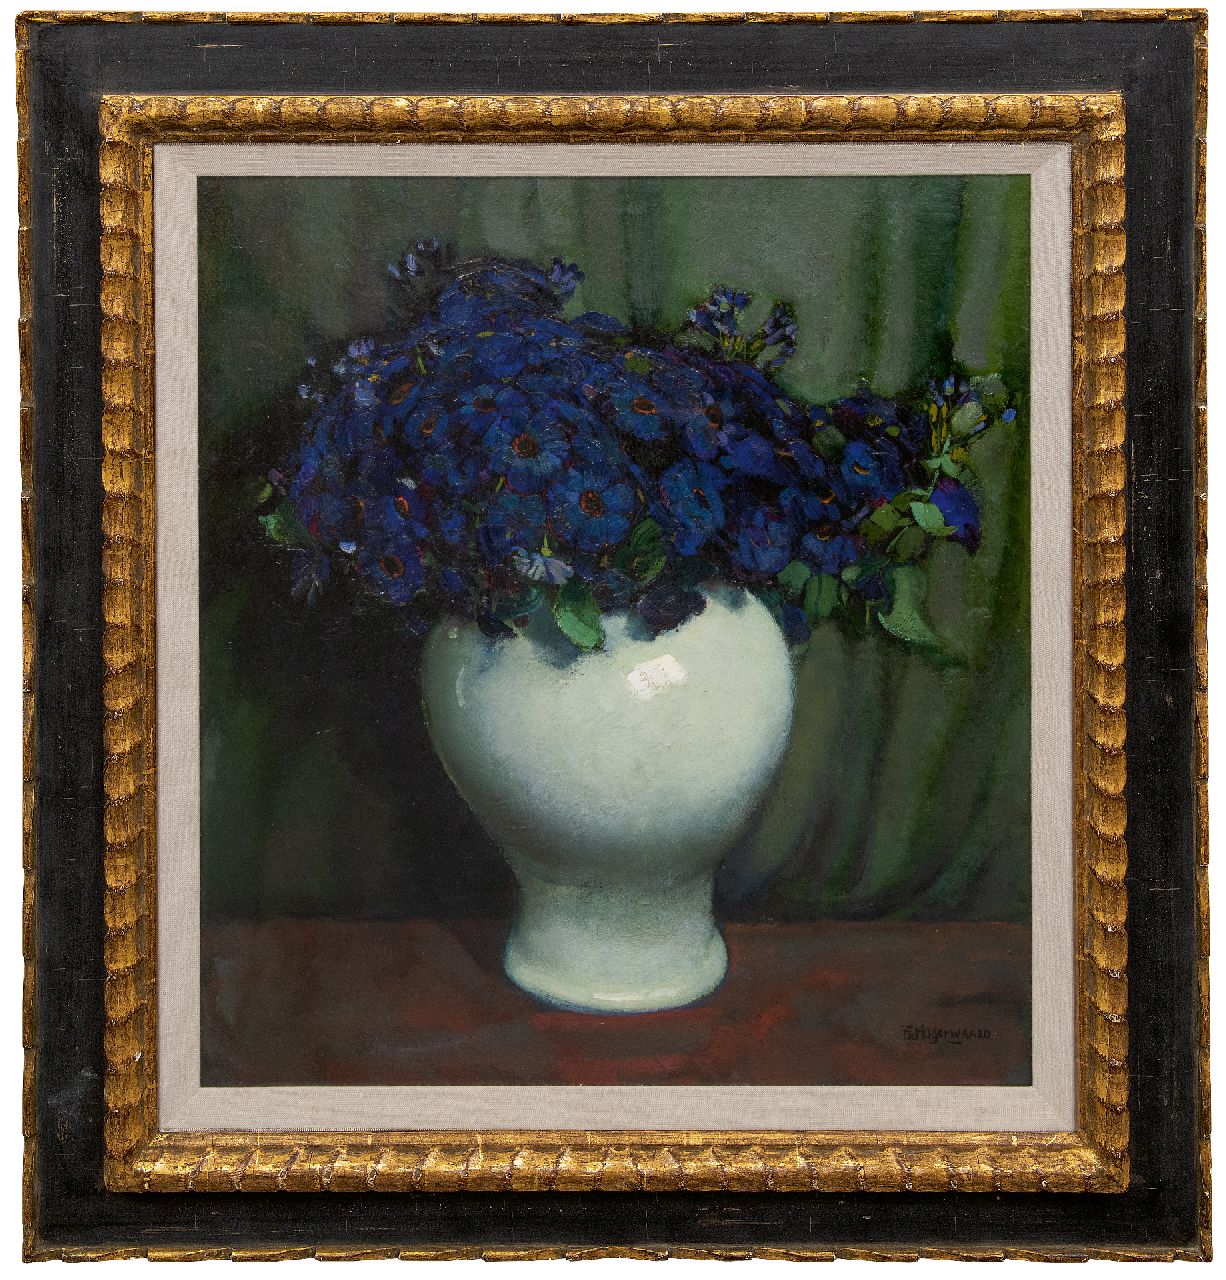 Hogerwaard F.  | François 'Frans' Hogerwaard | Paintings offered for sale | Blue flowers in a white pot, oil on canvas 70.0 x 60.0 cm, signed l.r.